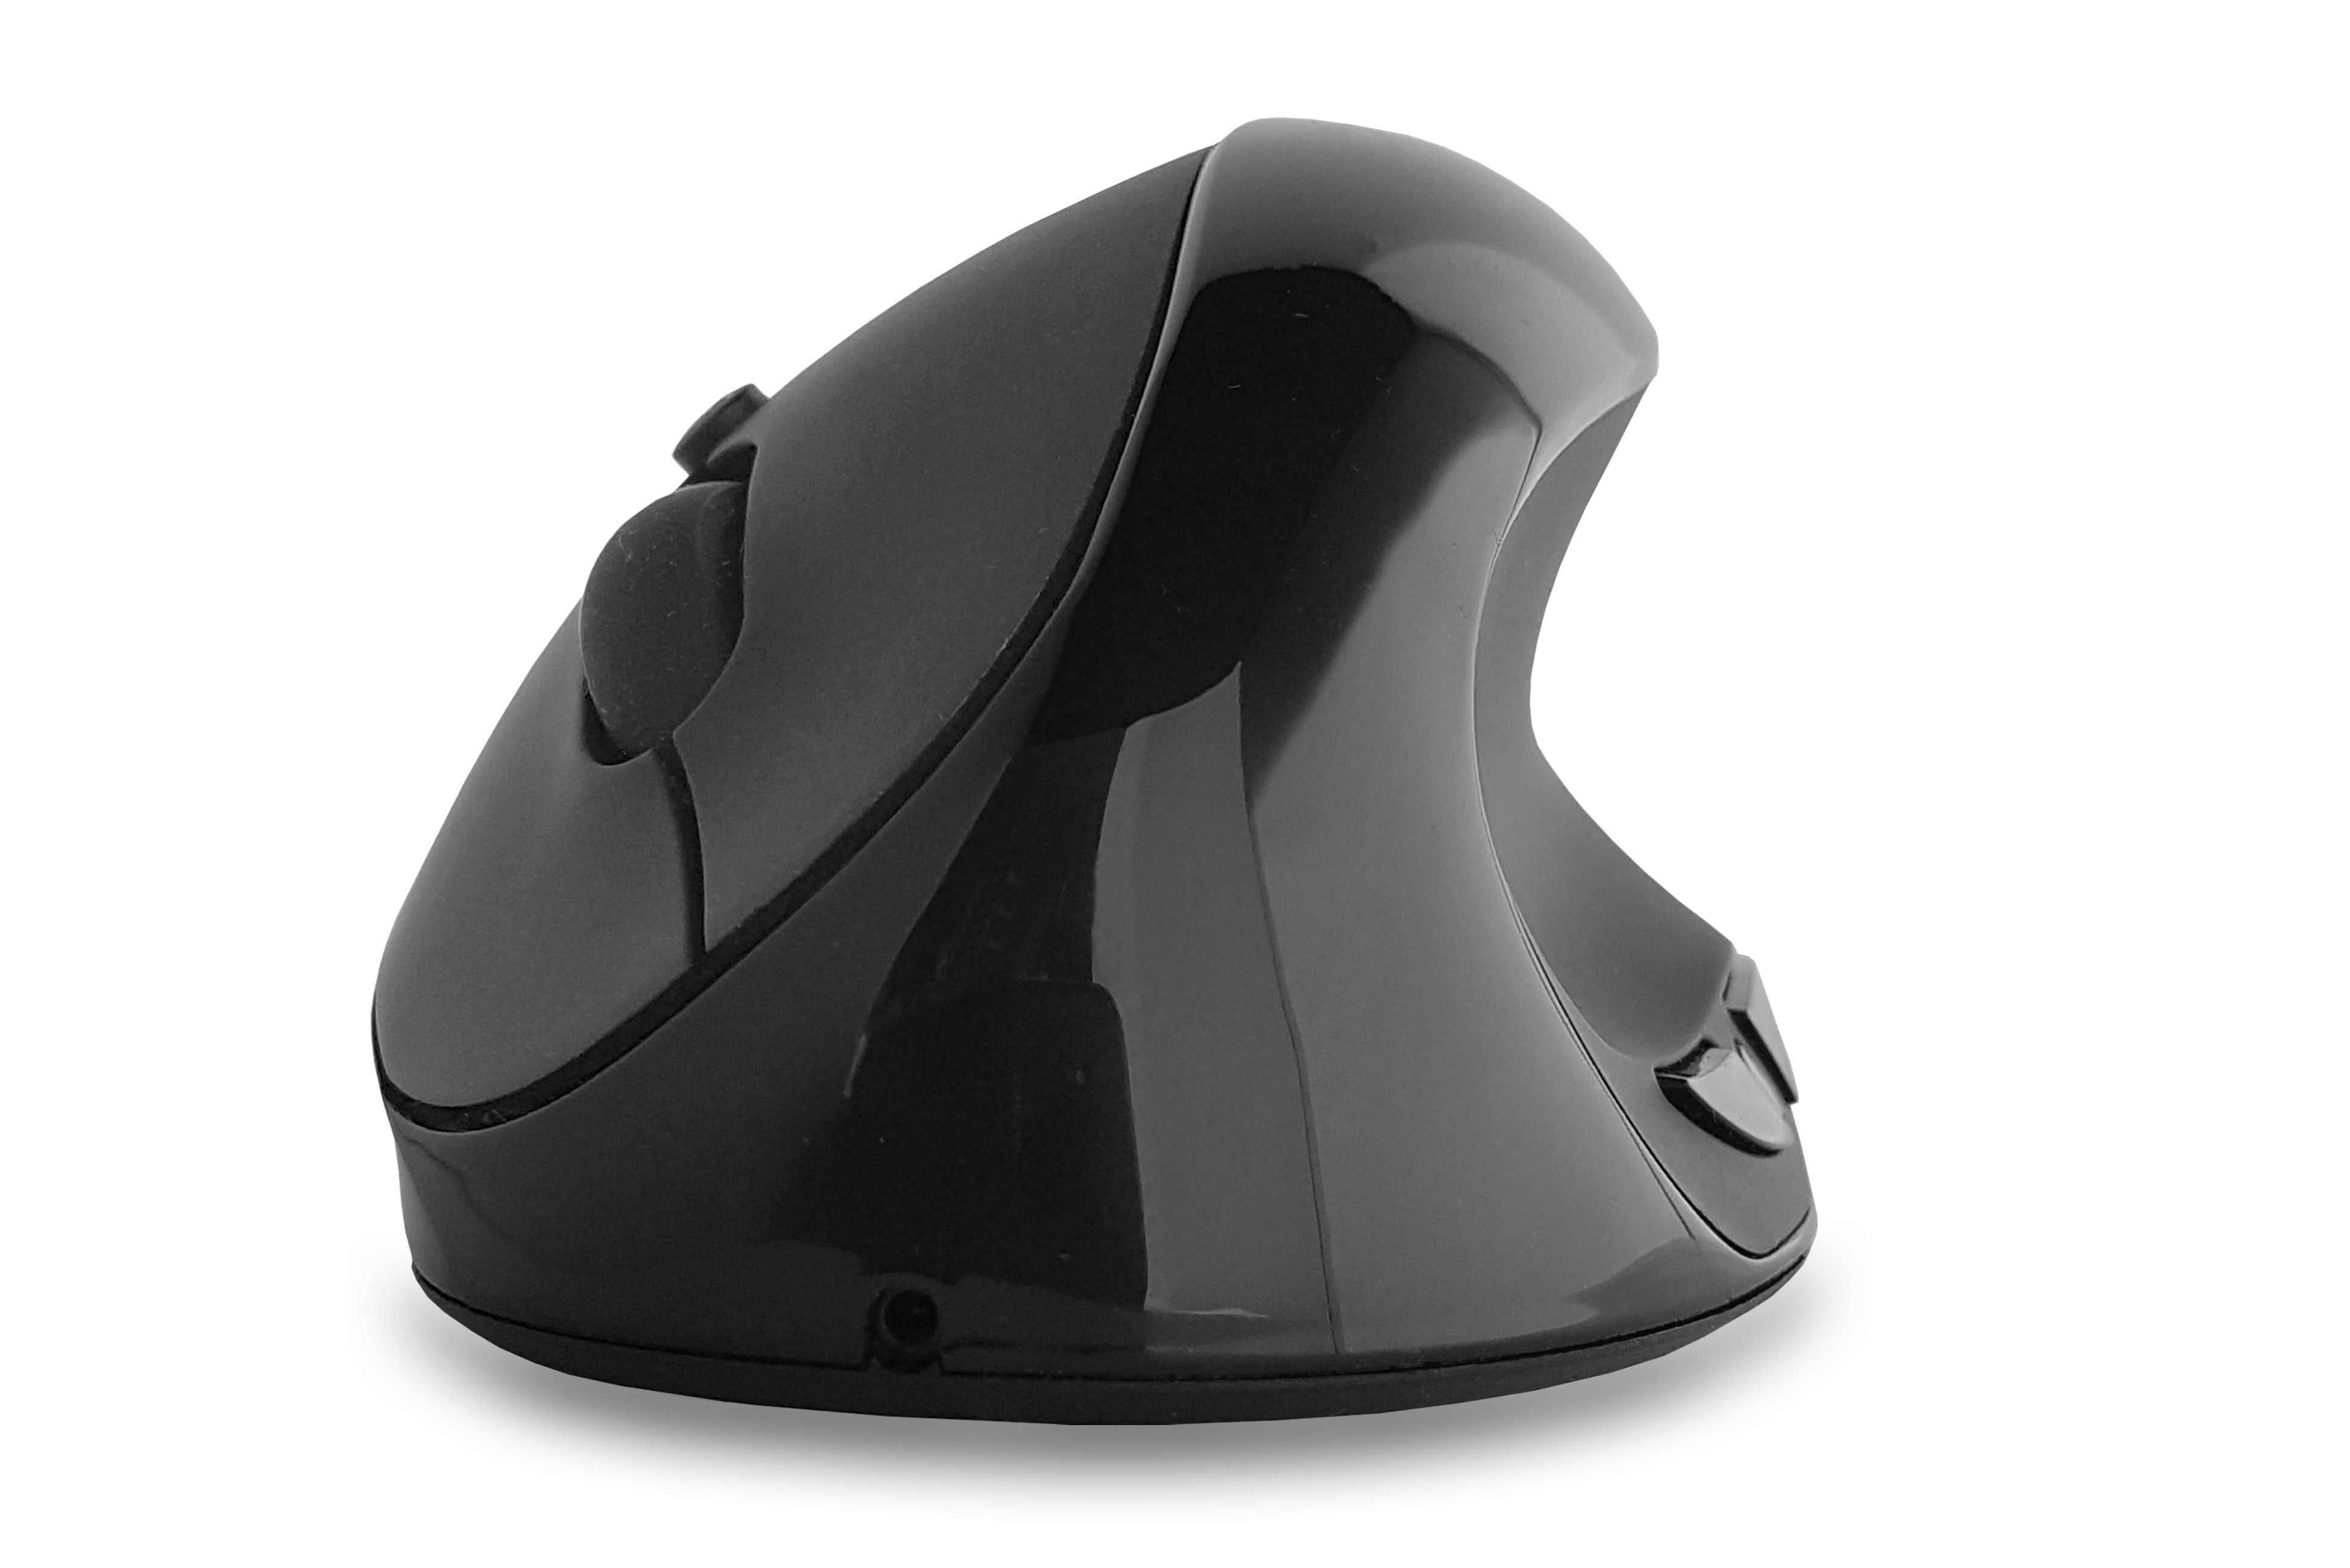 JENIMAGE Kabellos Wireless Rechts ergonomische Rechtshänder JI-CW-01 schwarz Maus,